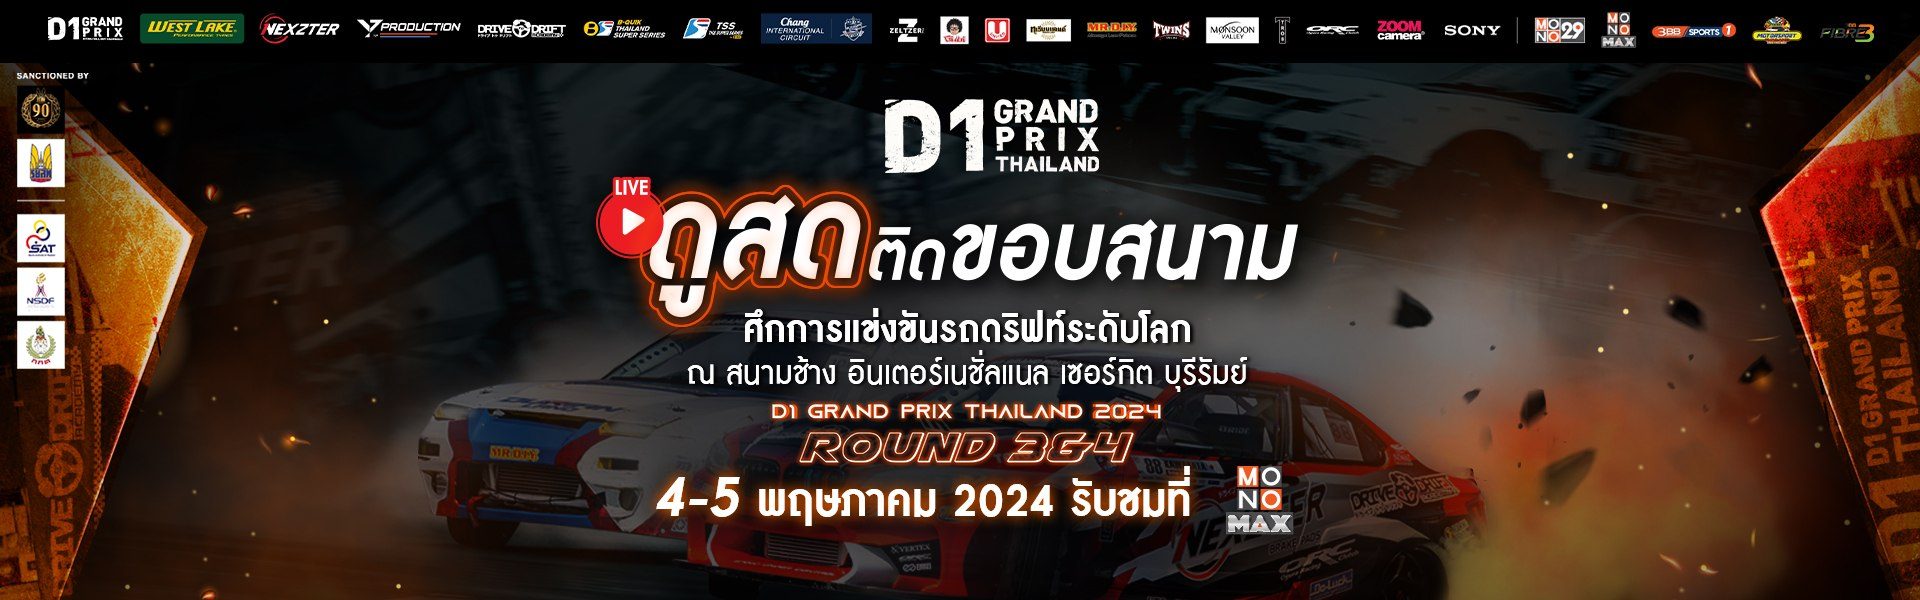 D1 GRAND PRIX THAILAND 2024 | ROUND 3&4 | 4-5 พฤษภาคม 2024